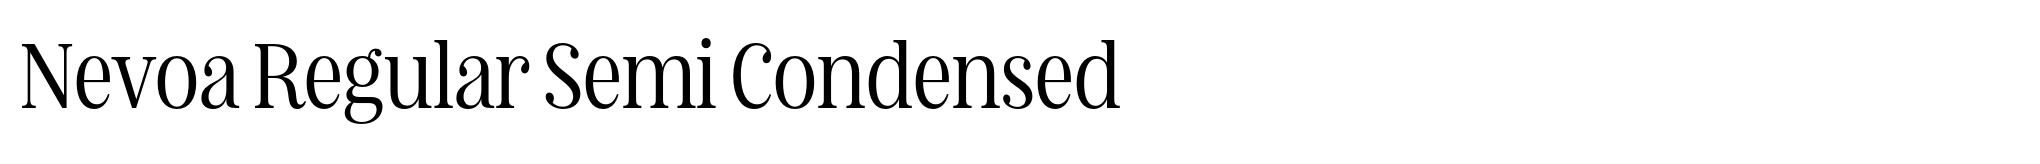 Nevoa Regular Semi Condensed image